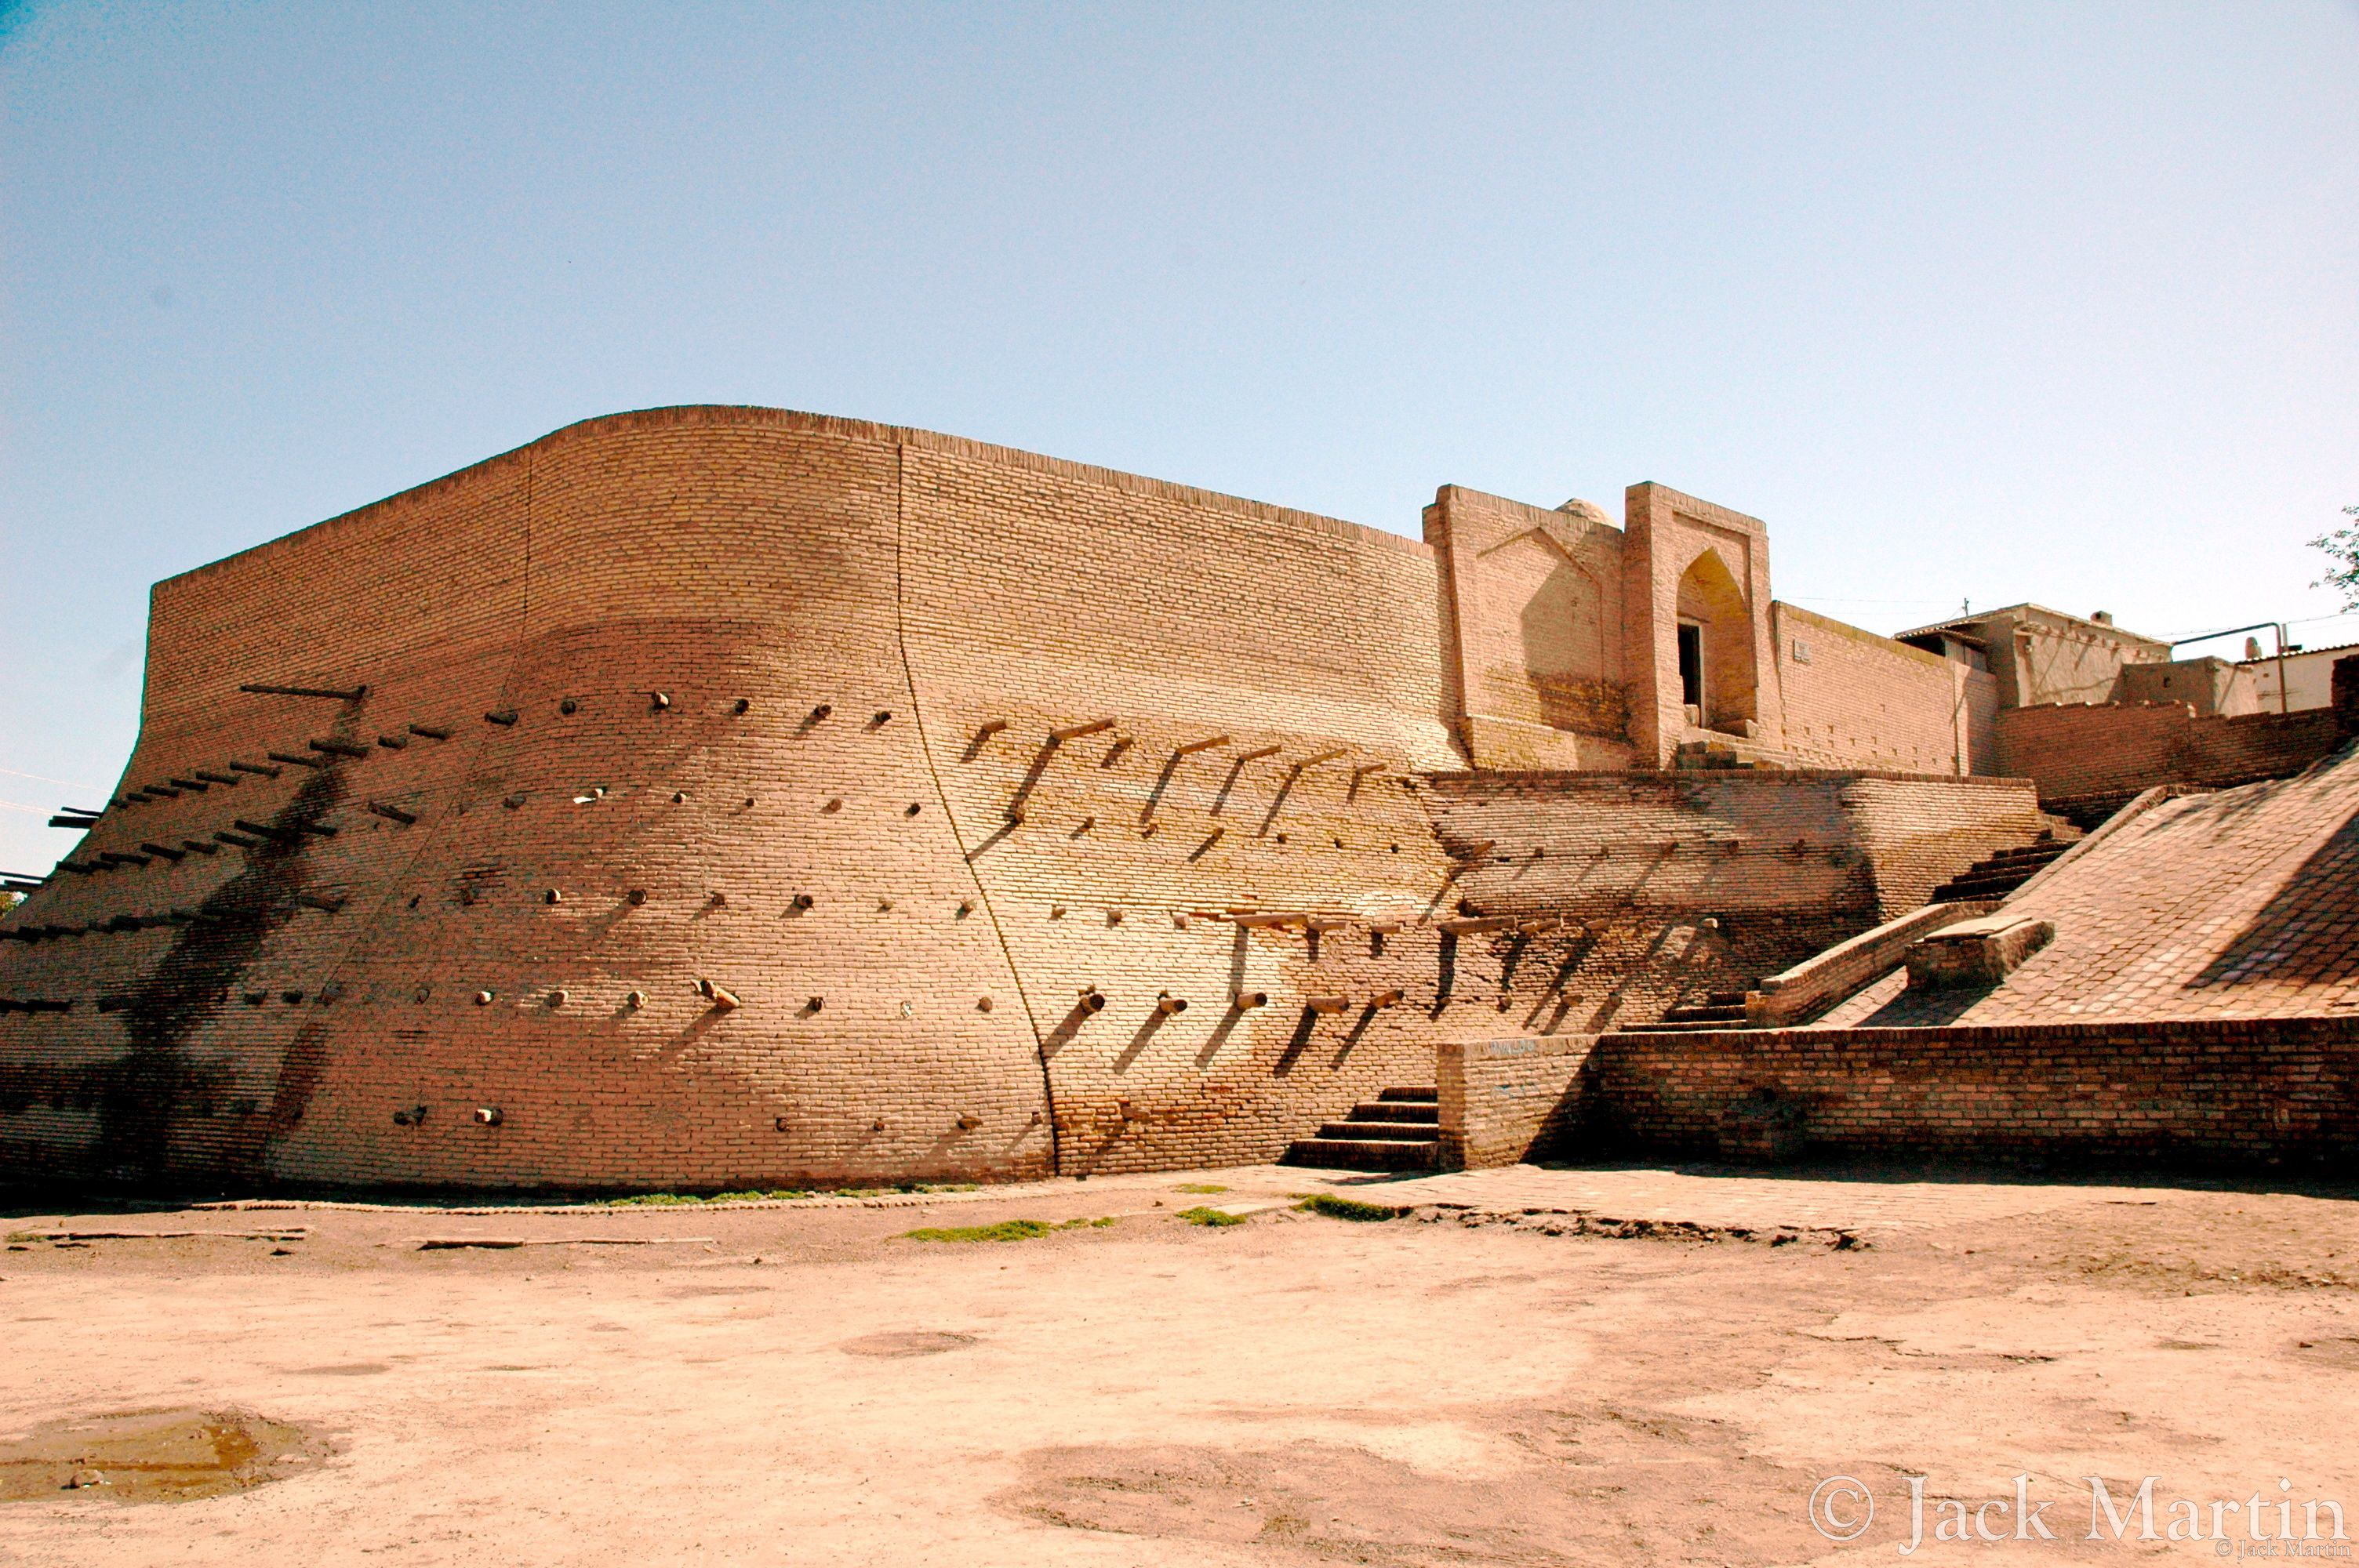 Uzbekistan. Ark Fortress in the ancient Silk Road city of Bukhara. 2009 